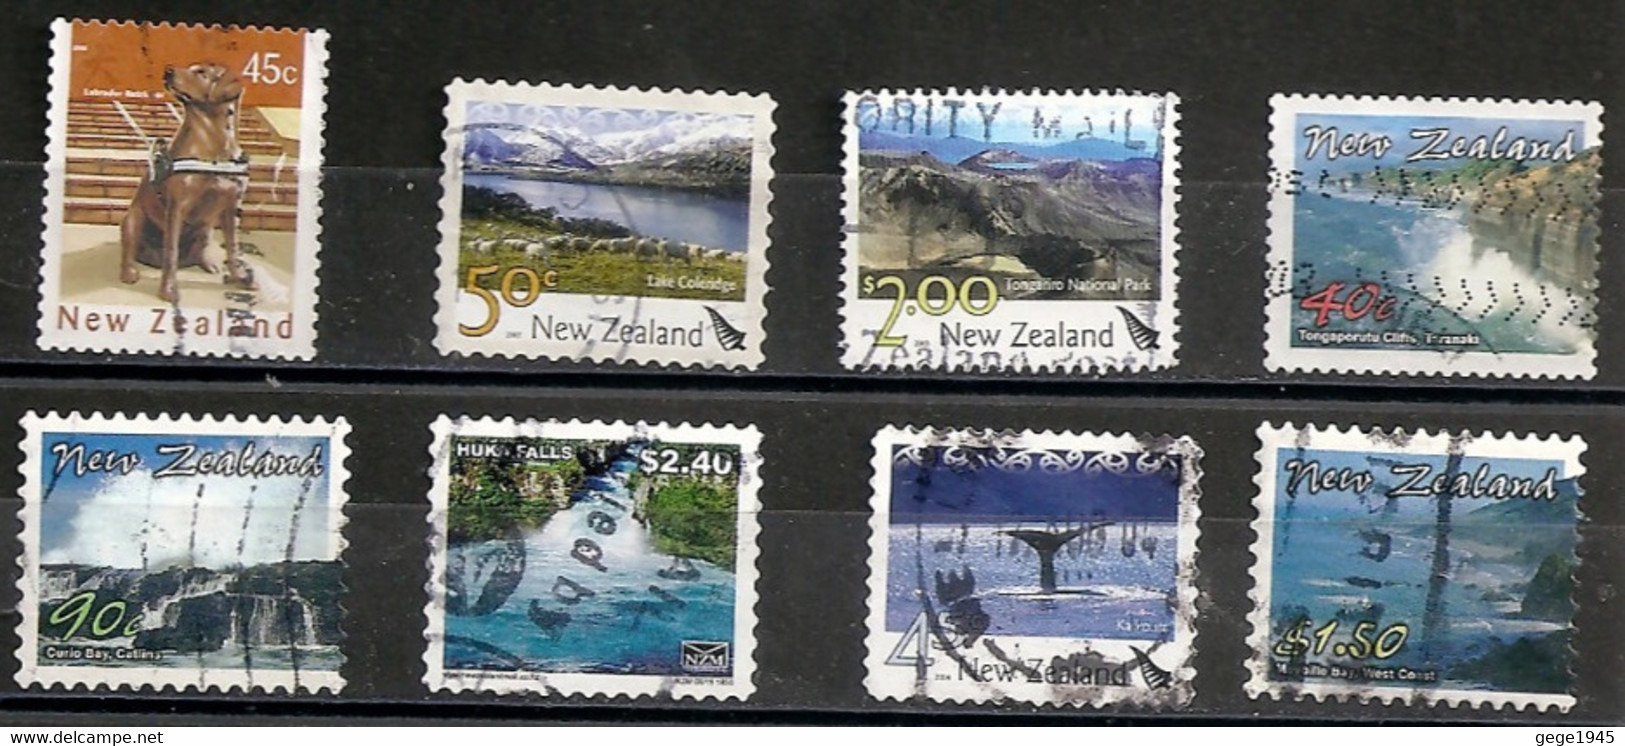 8  Timbres Oblitérés Différents - Used Stamps